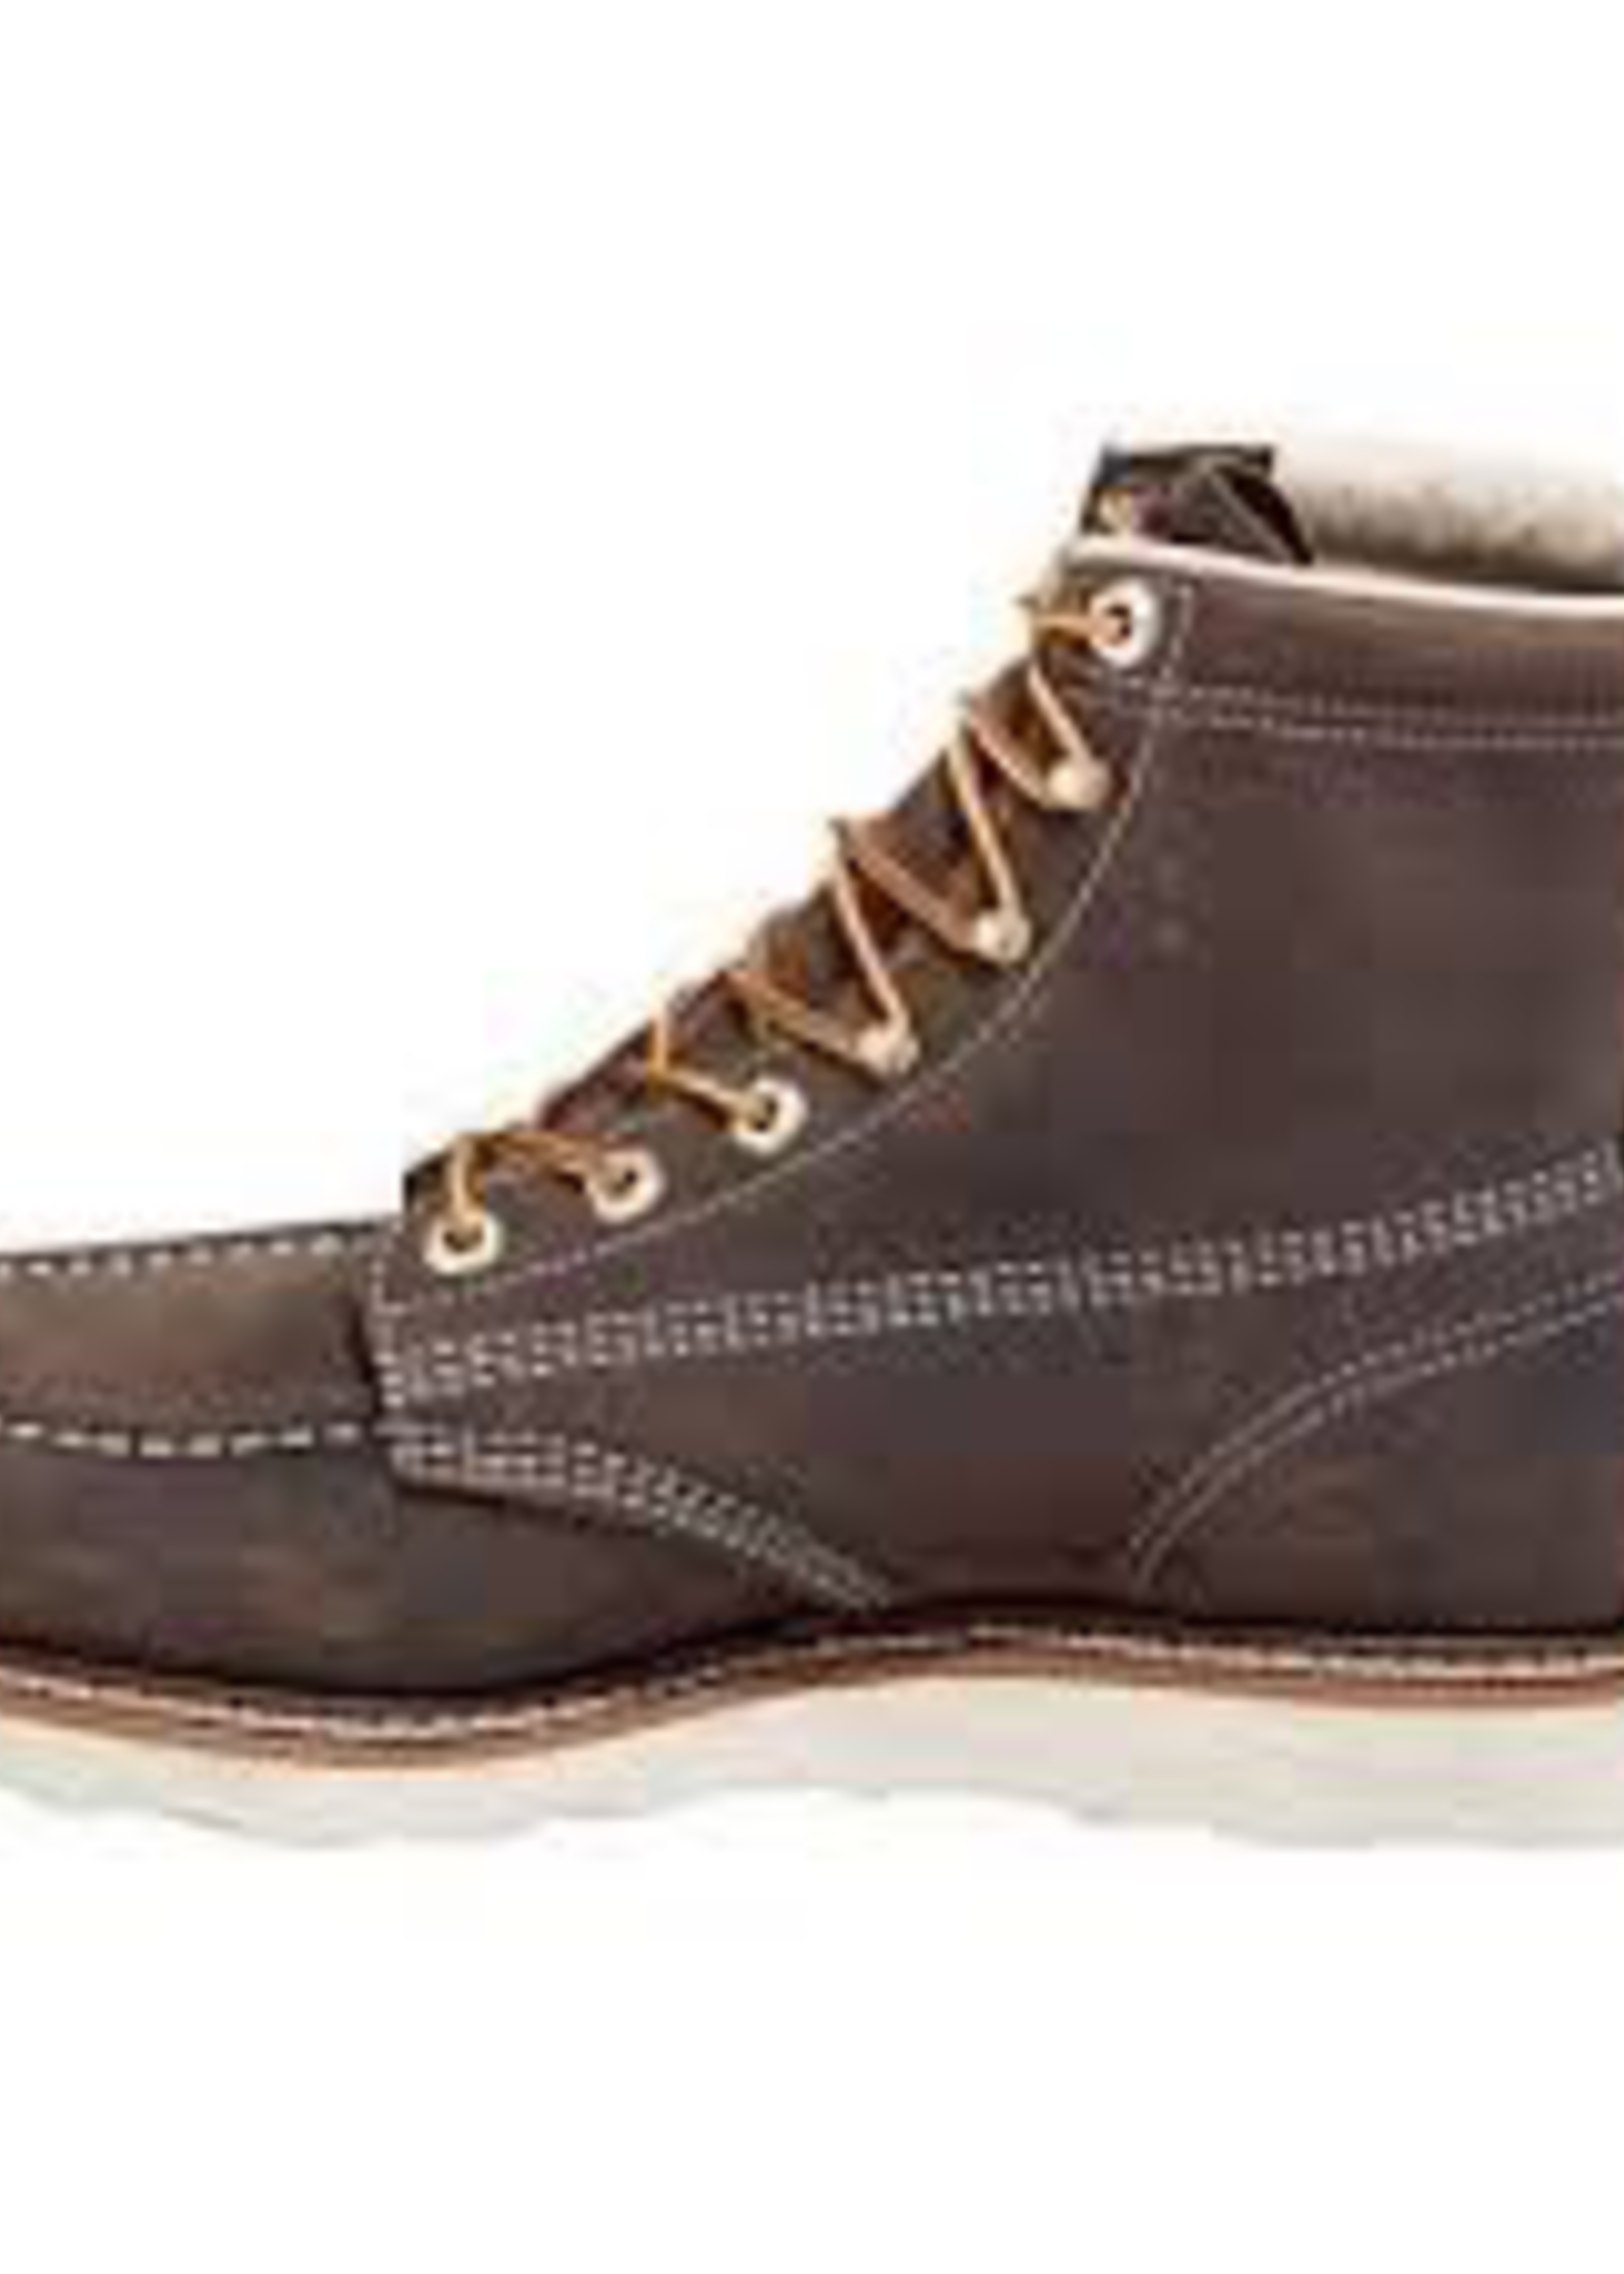 Boots-Men THOROGOOD 814-4203 6in Soft Moc Toe